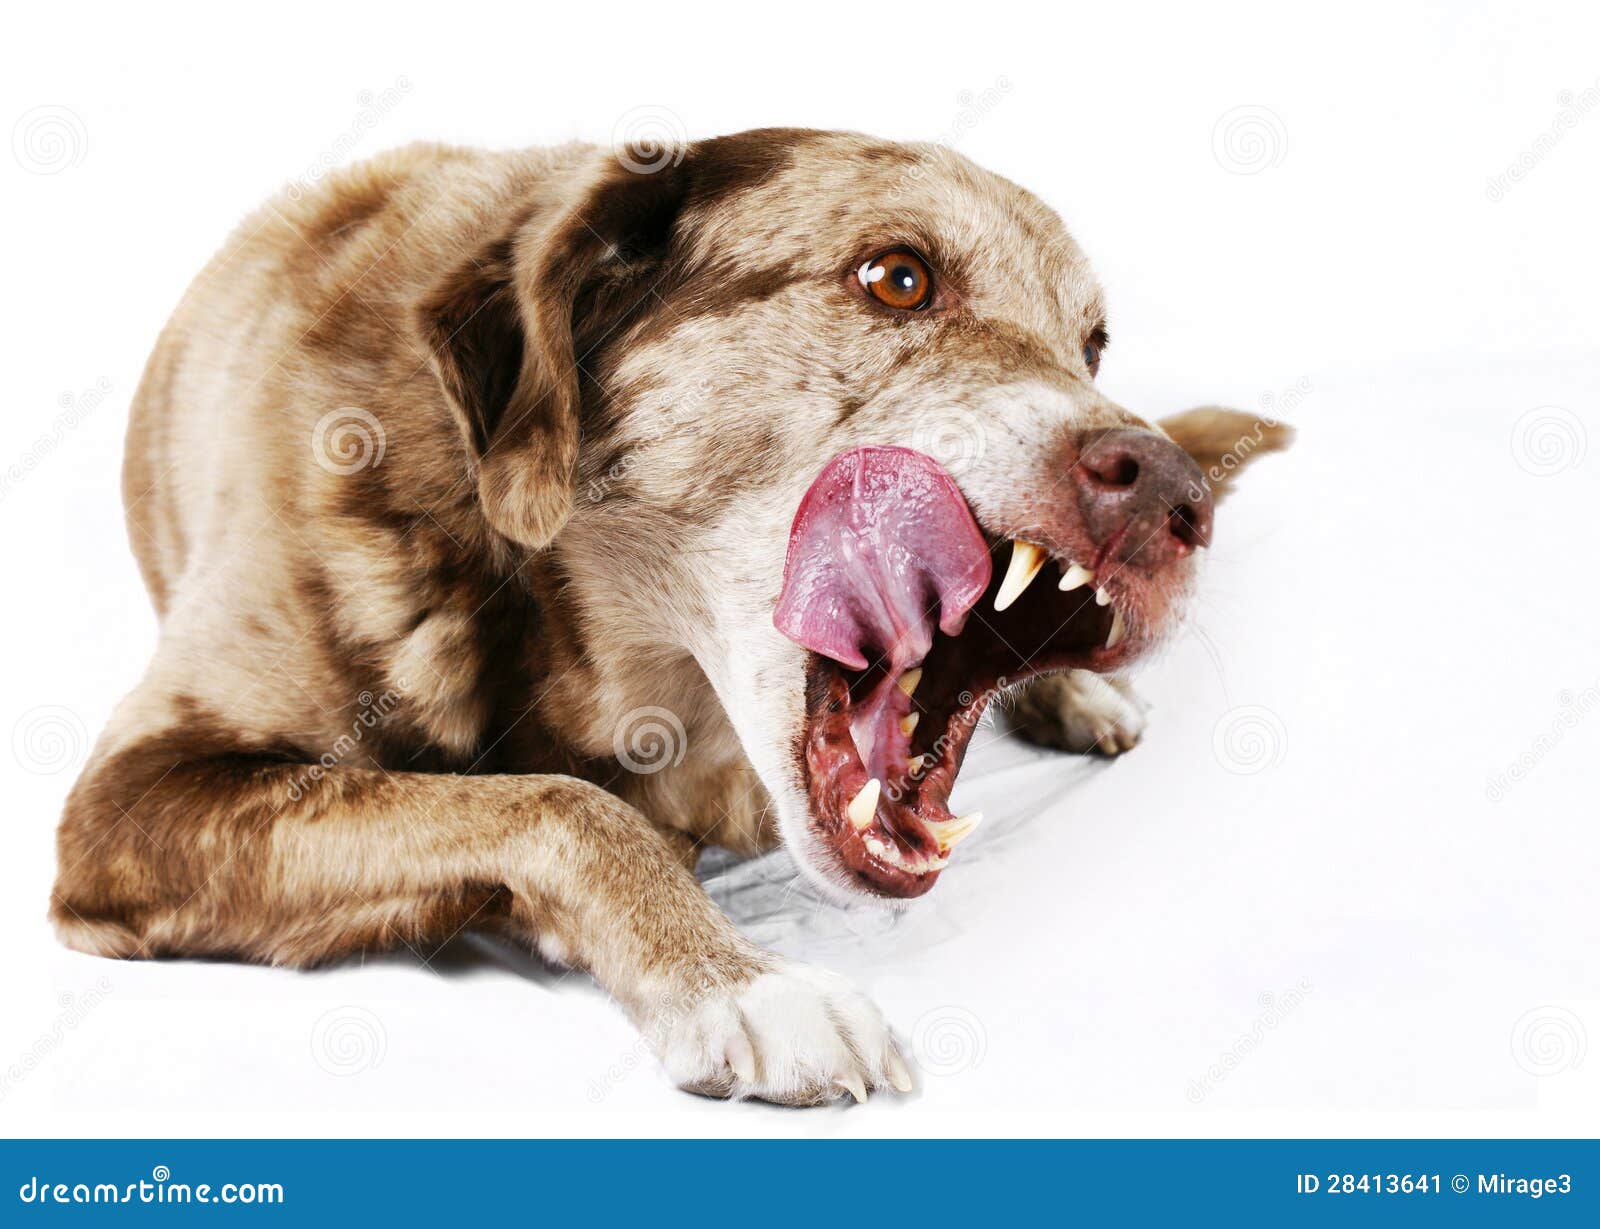 large-mutt-dog-licking-its-lips-28413641.jpg